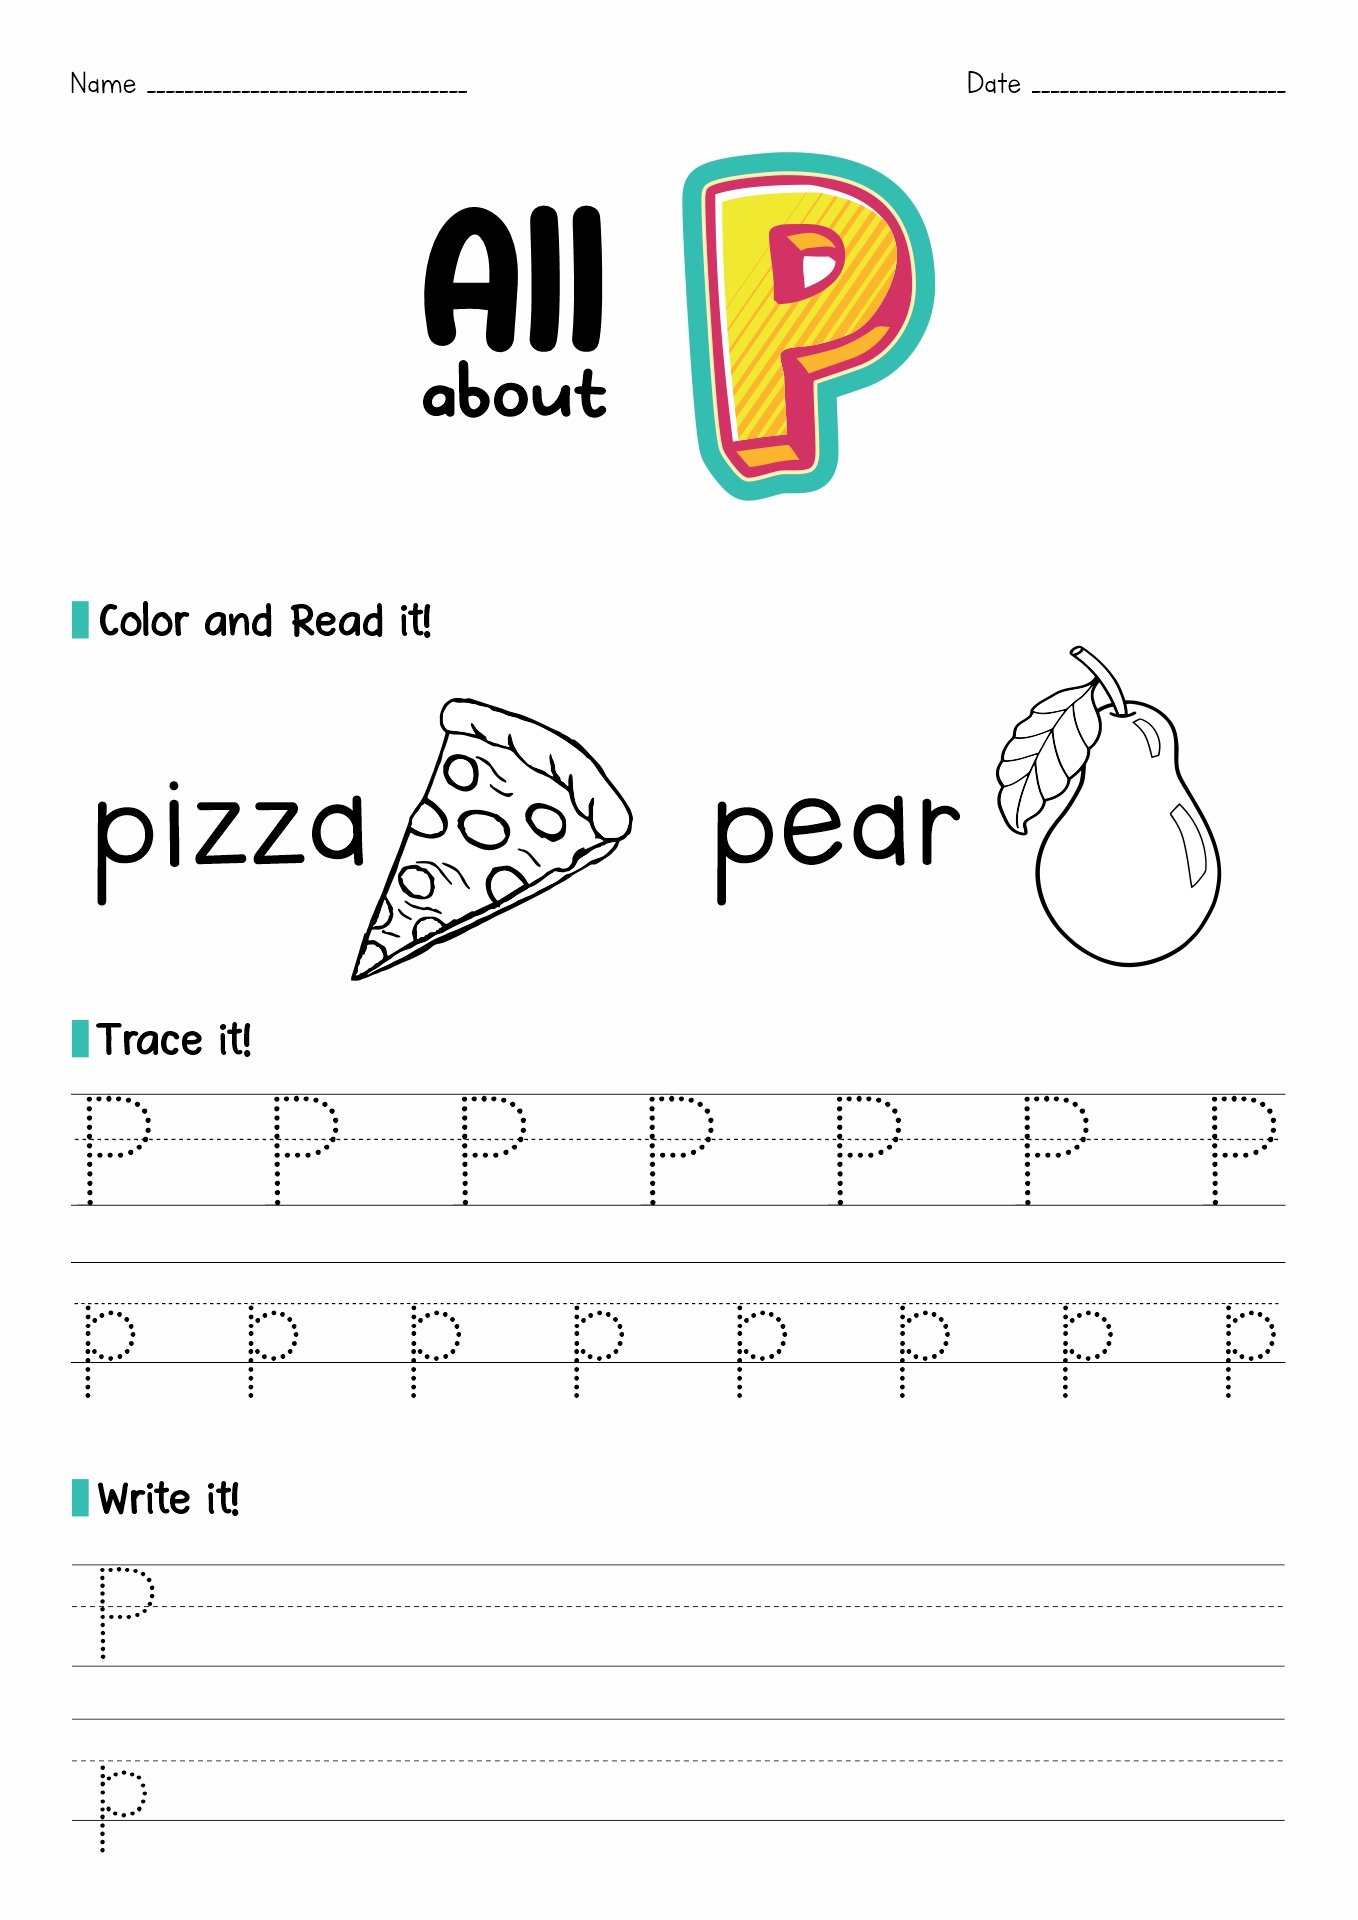 10 Best Images of Preschool Color By Letter Worksheets - Uppercase Lowercase Letters Worksheet